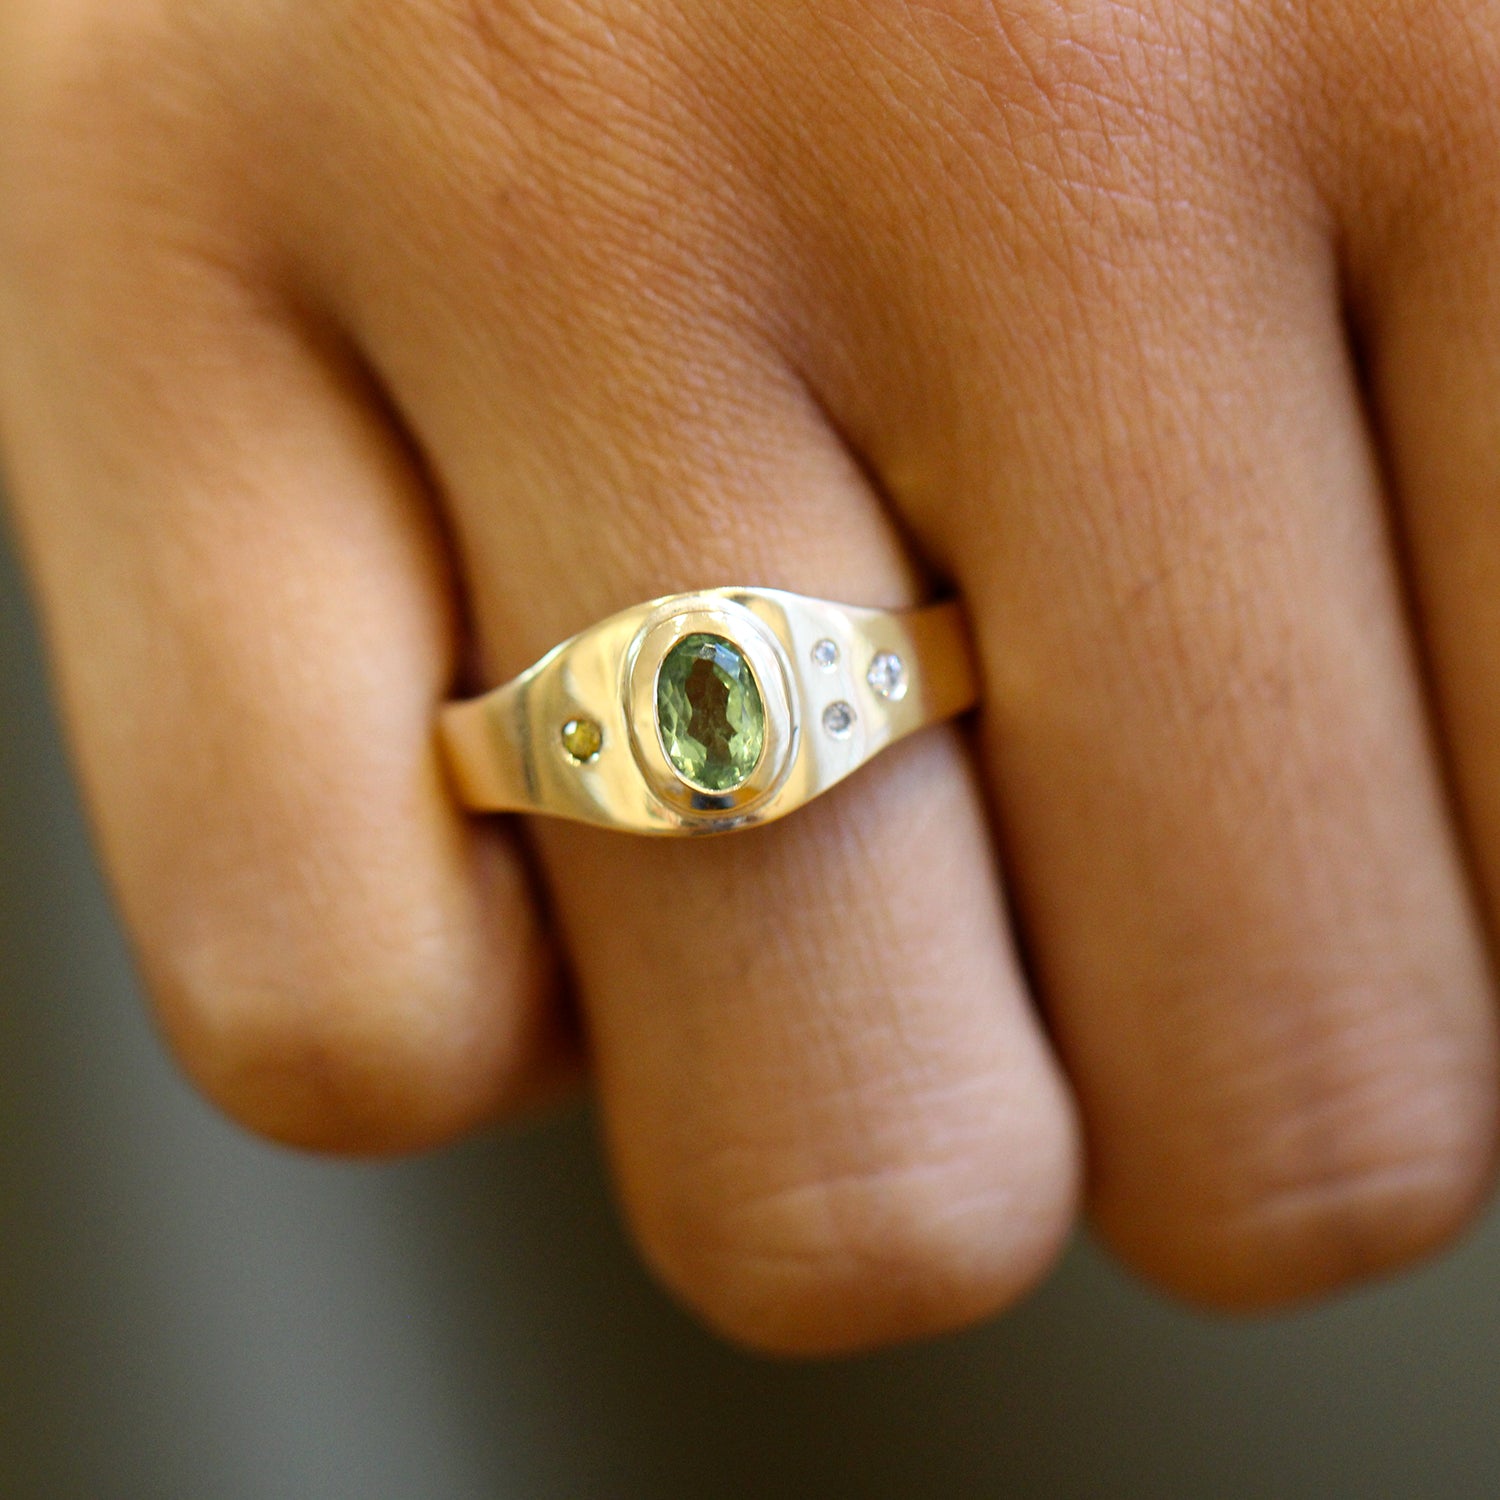 9 karat gold green tourmaline ring by Friederike Grace at designyard contemporary jewellery gallery Dublin Ireland